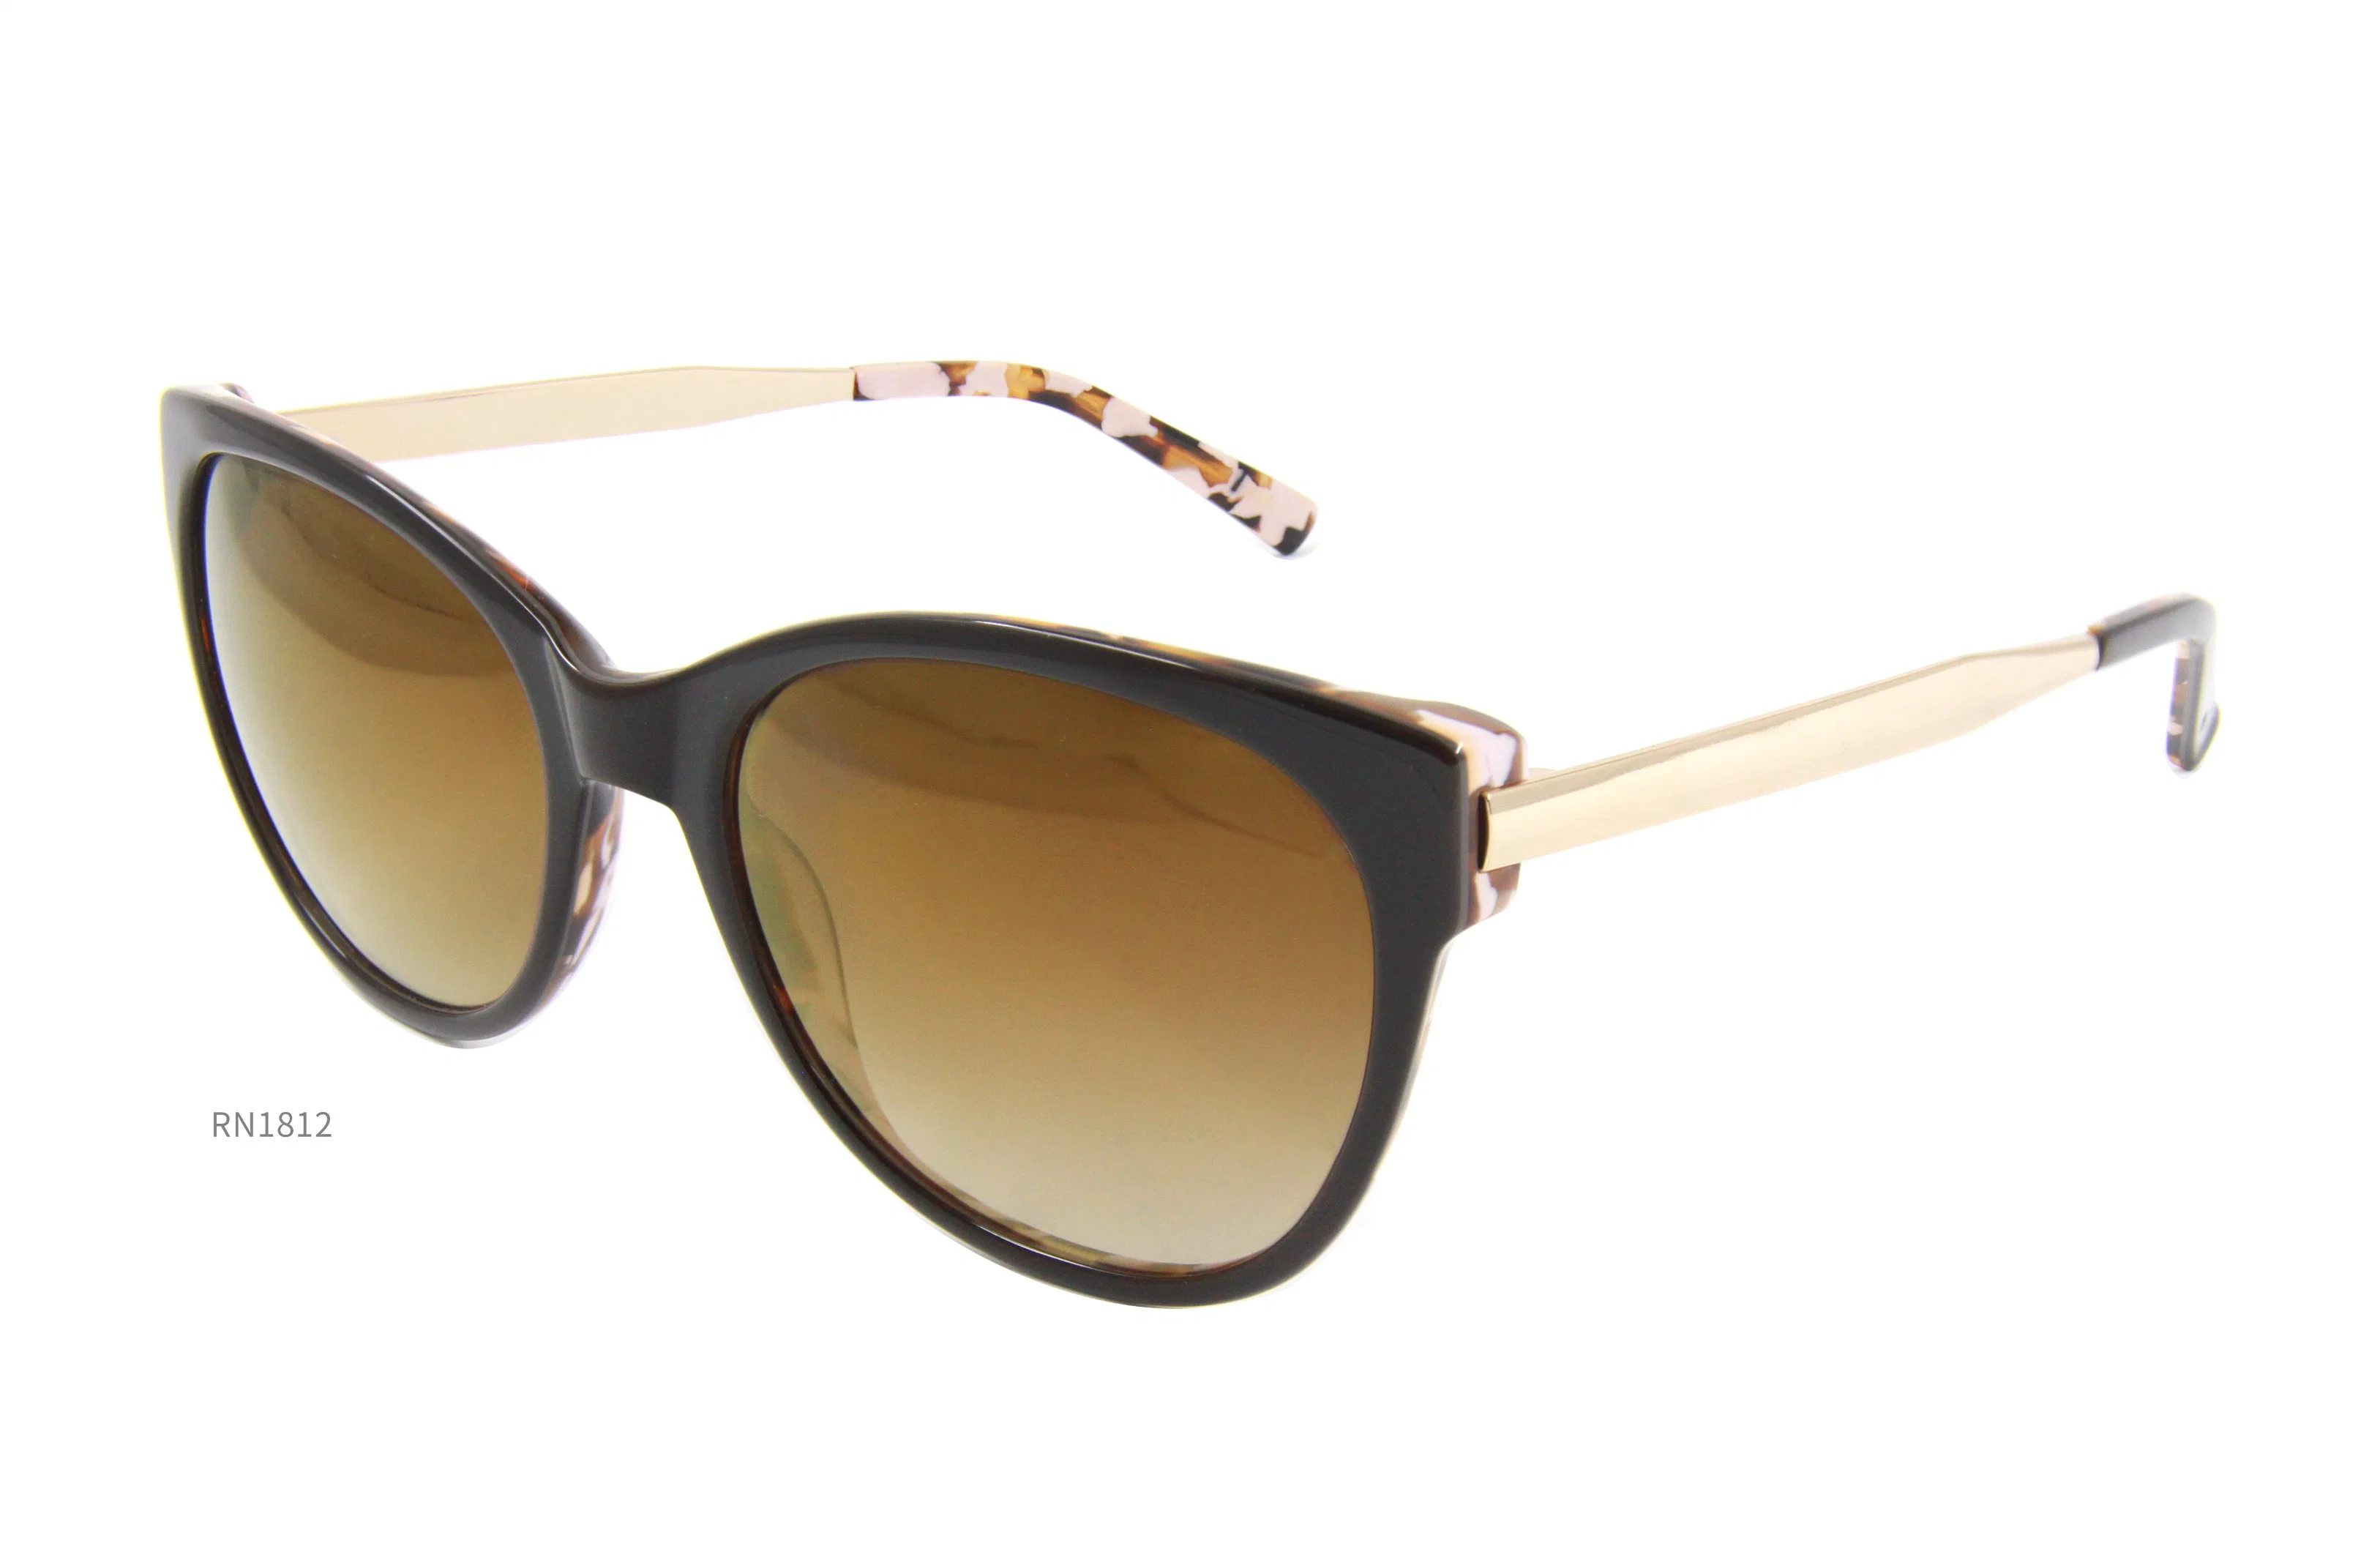 Designer Cat-Eye Shape Mazzucchell Acetate Sunglasses by Original Factory